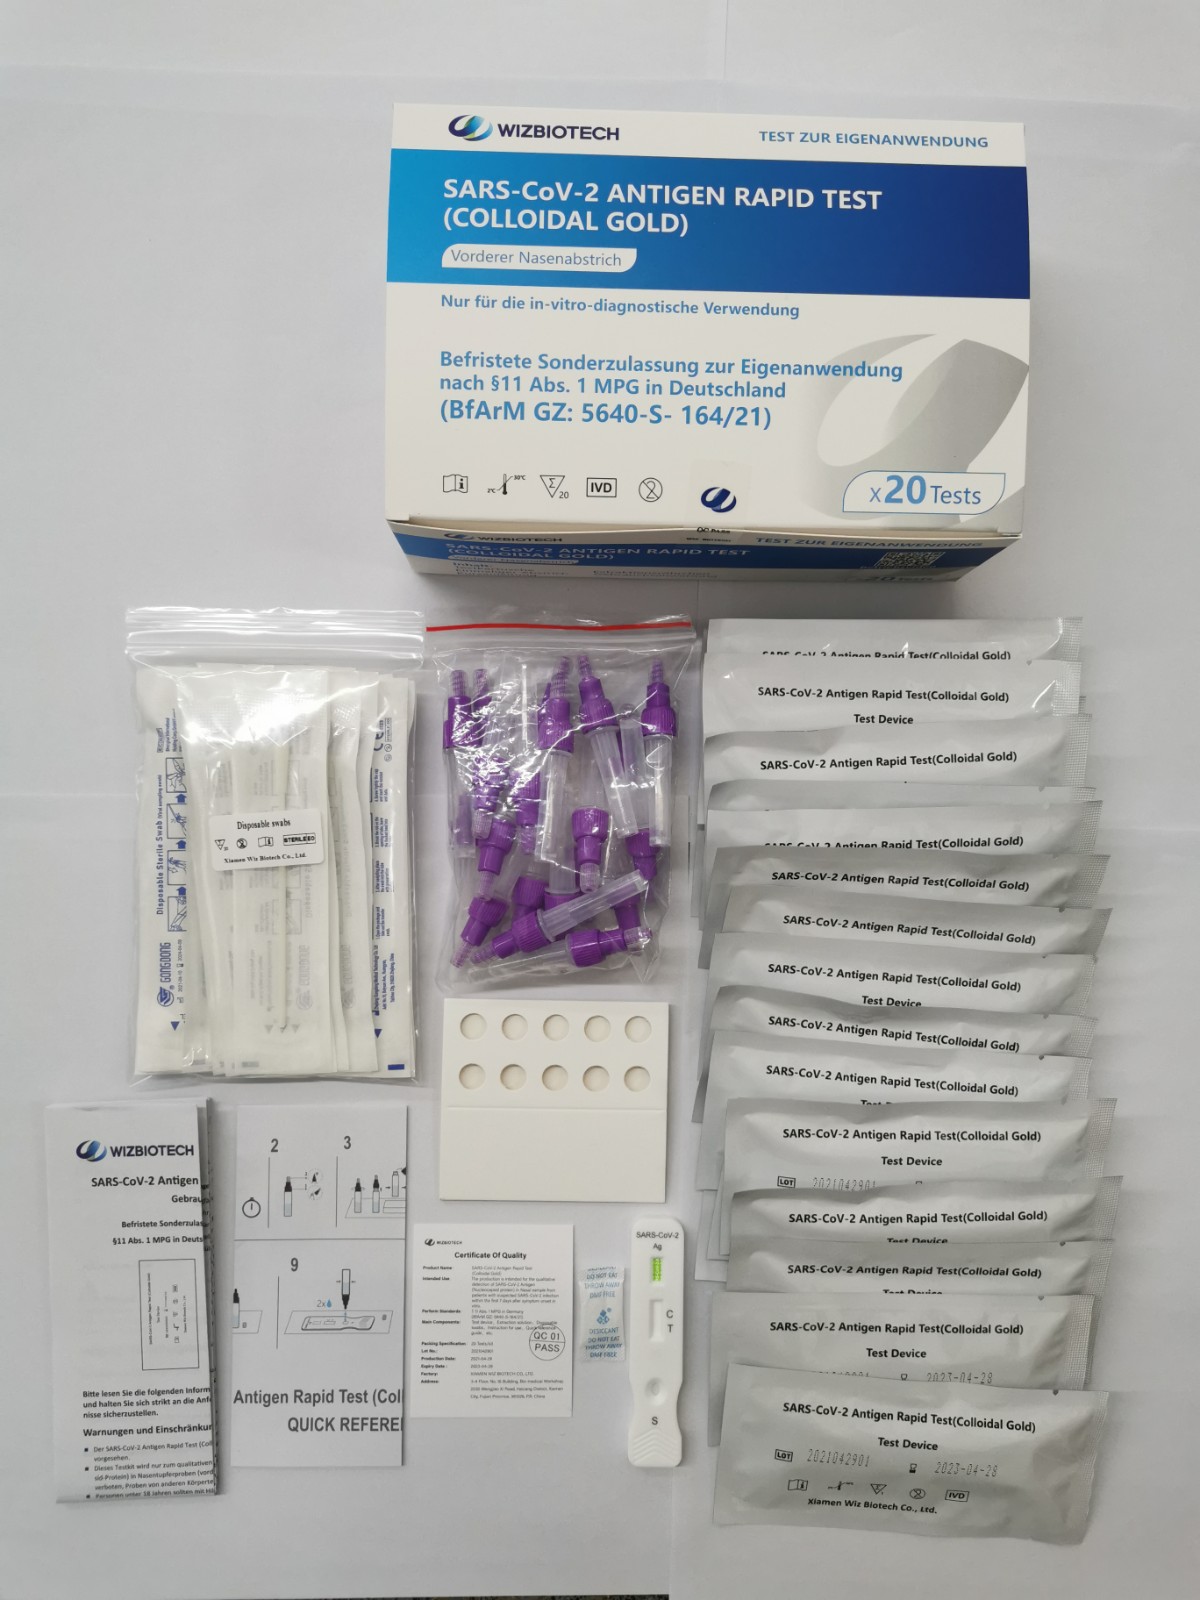 SARS-CoV-2 Antigen Rapid Test (self-testing)